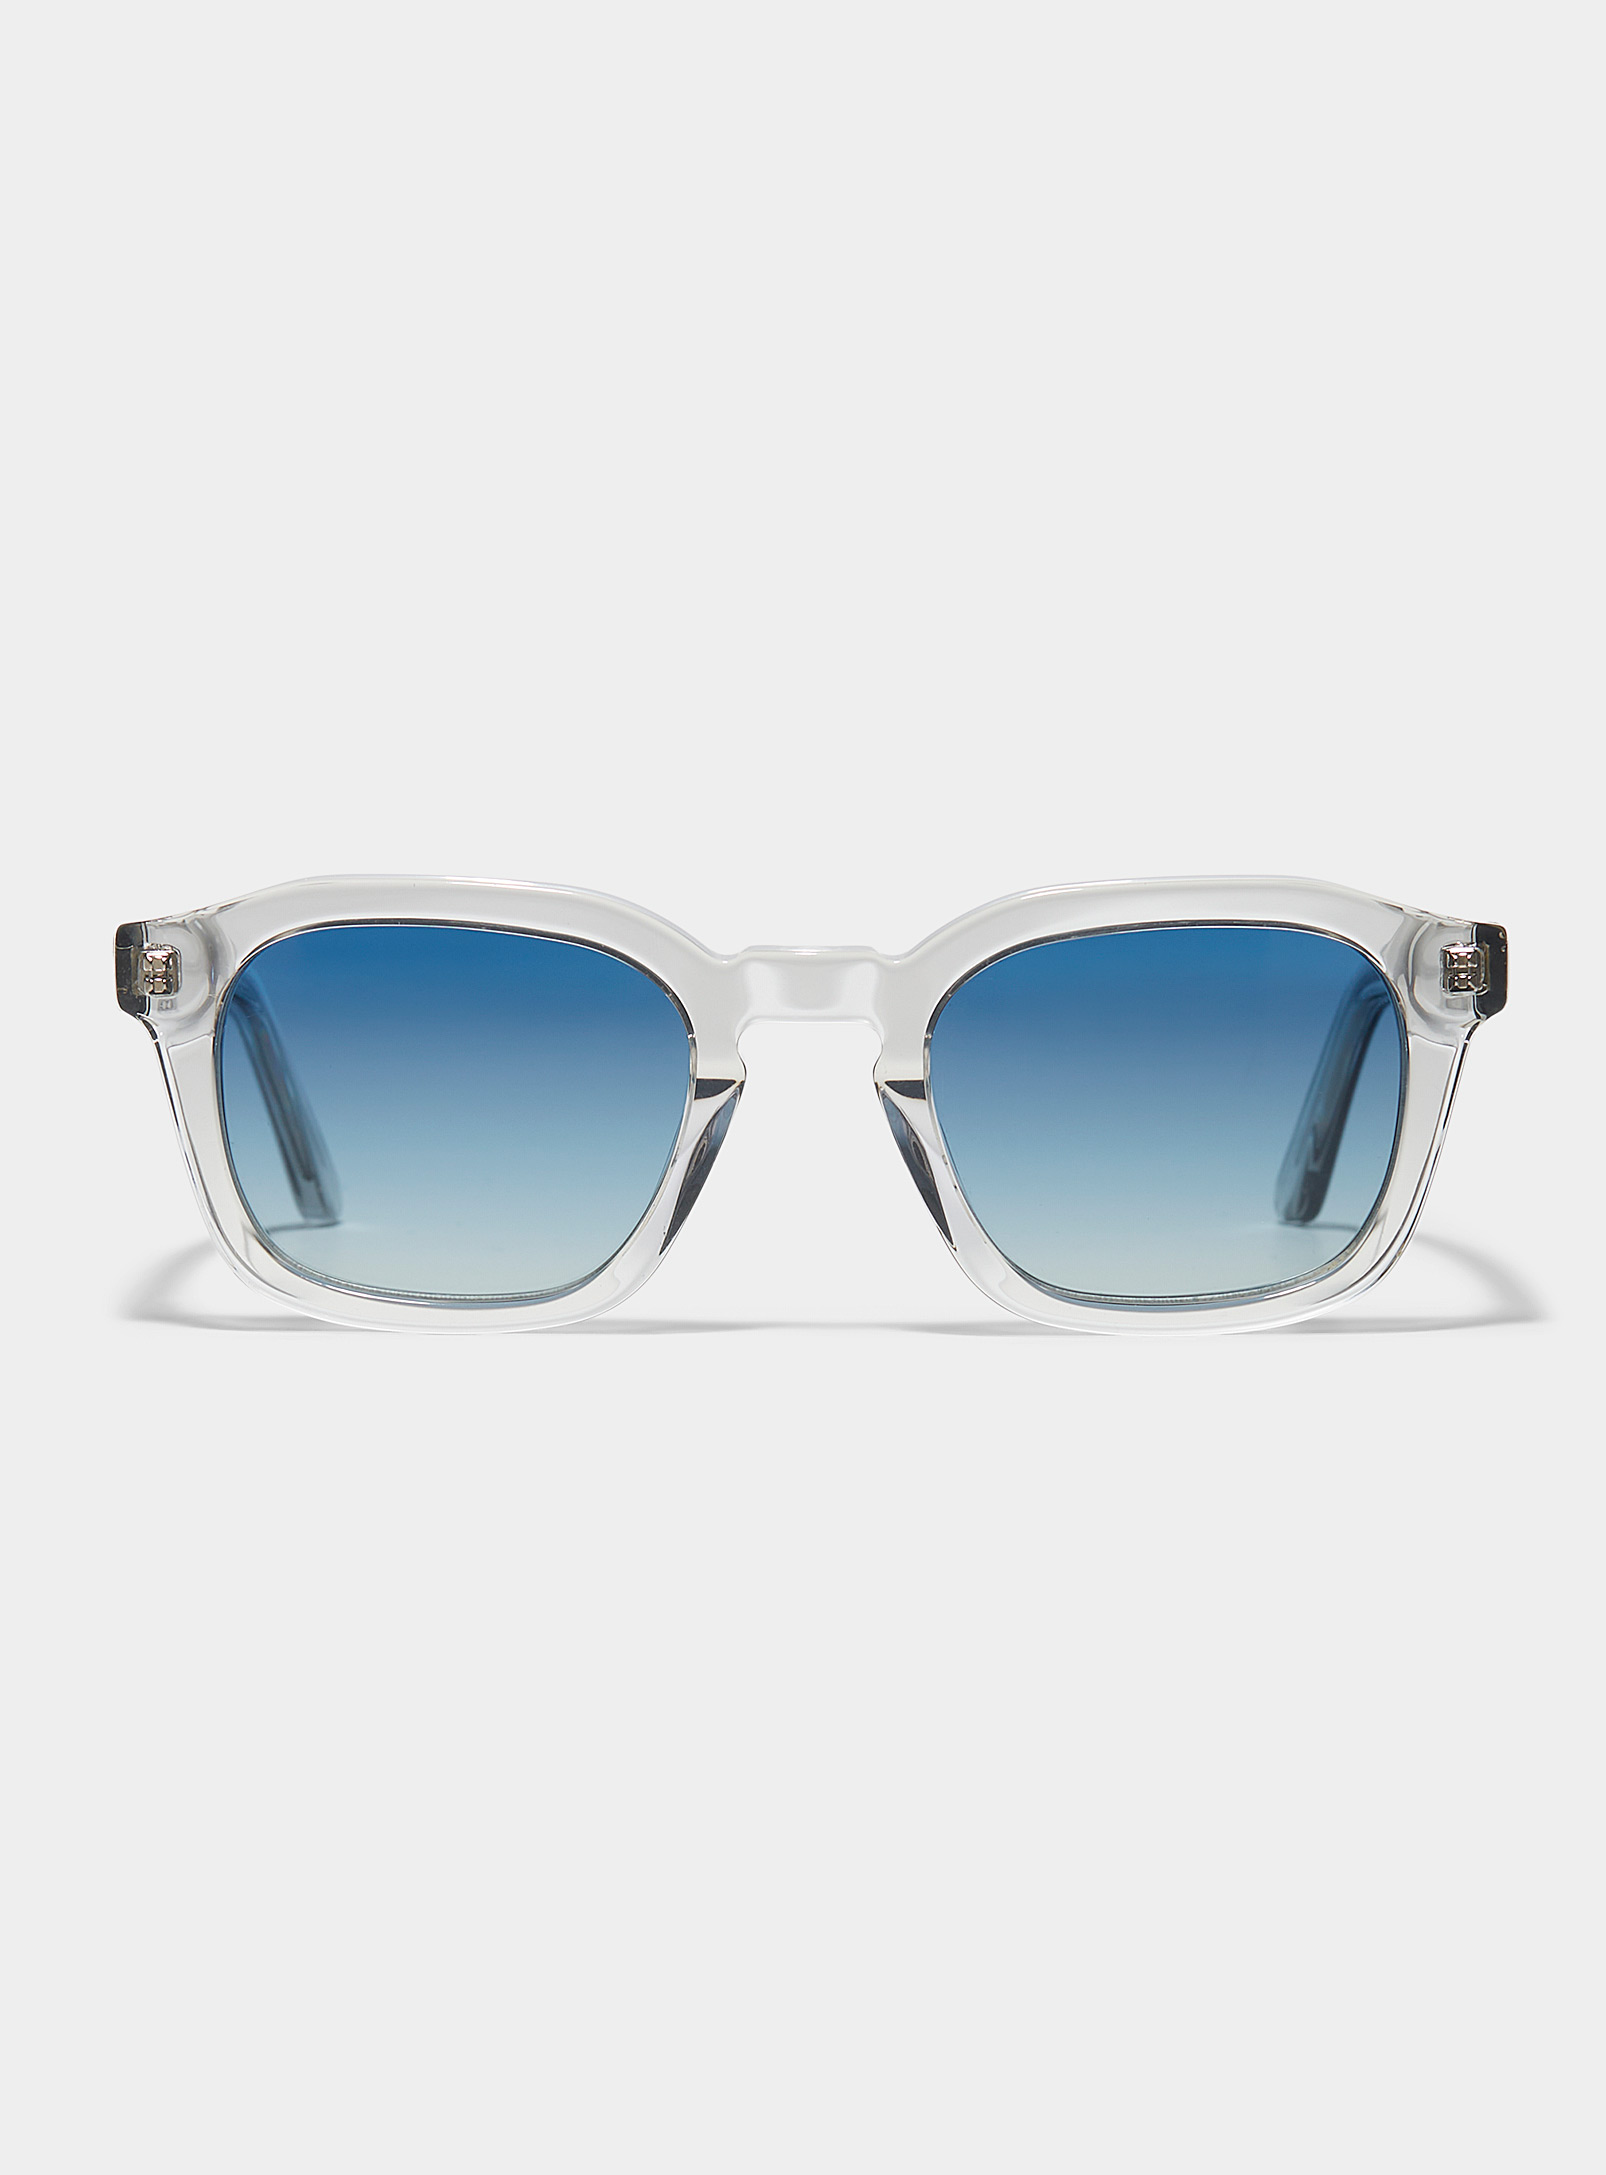 French Kiwis Oscar Square Sunglasses In White